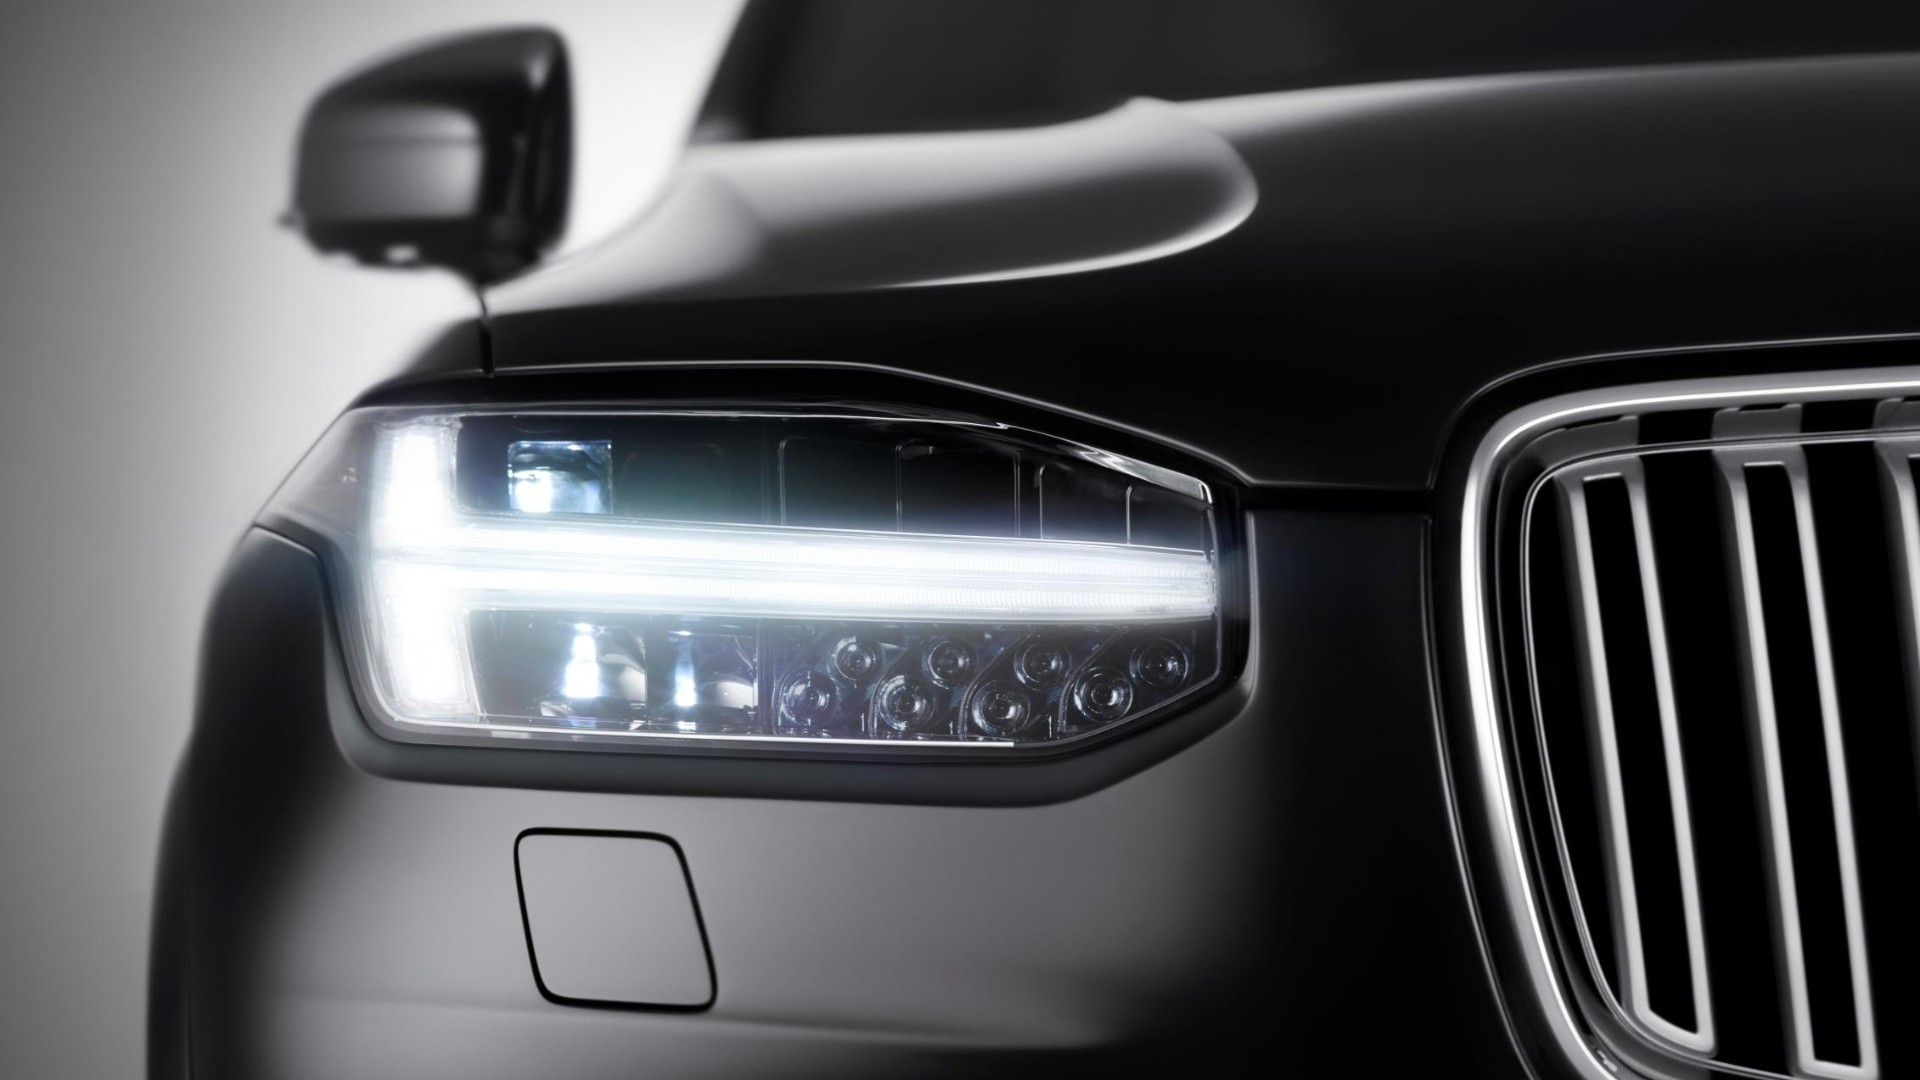 Are modern car headlights too bright?